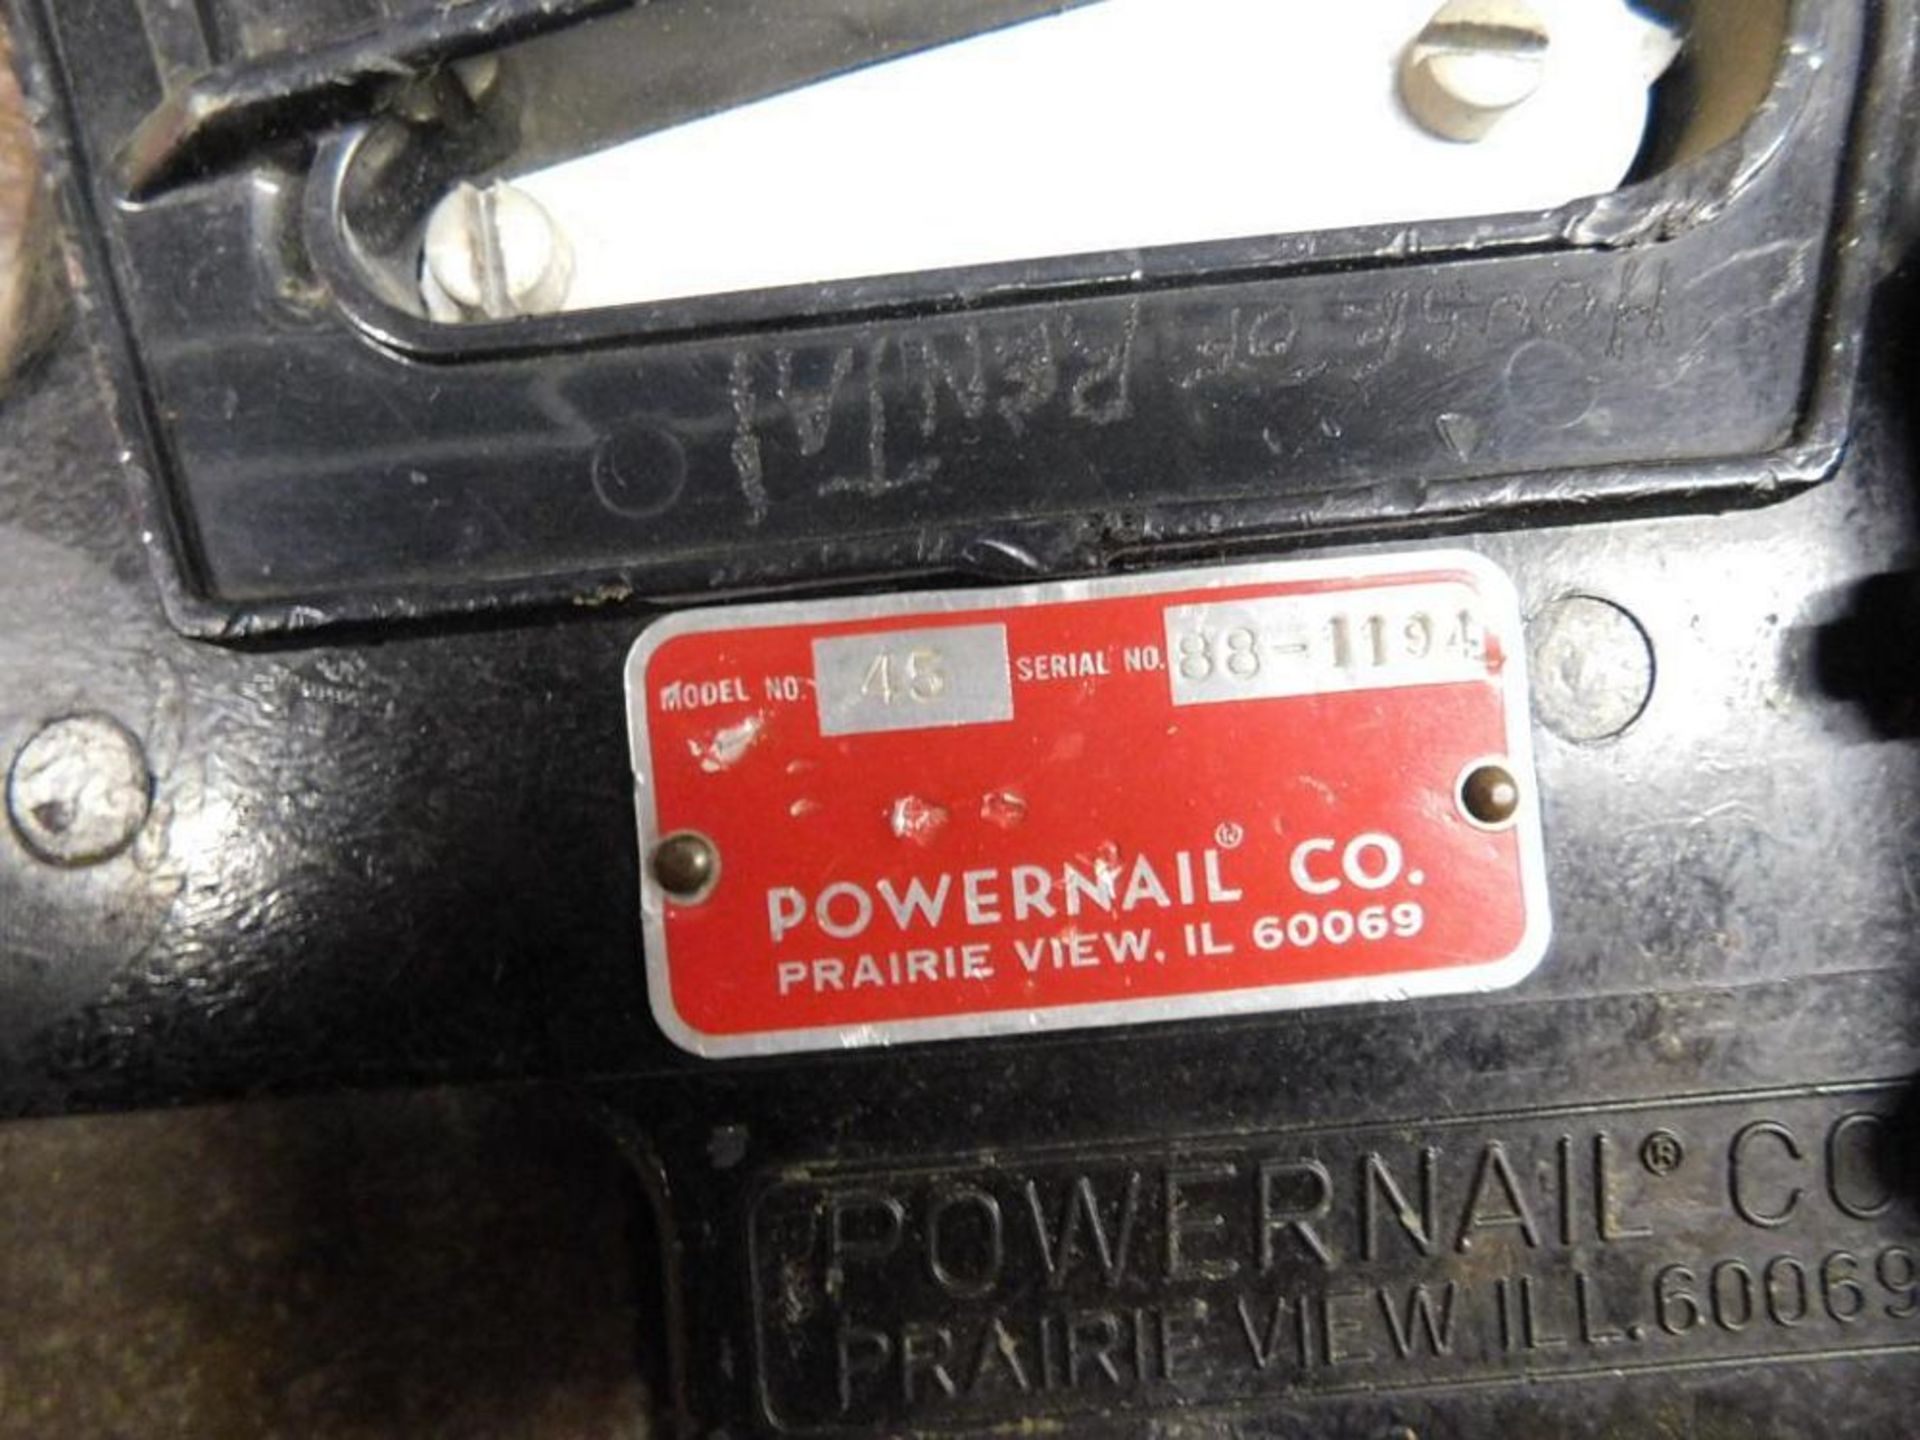 Powernail Manual Hardwood Floor Nailer, Model 45 (LOCATION: 318 N. Milwaukee Ave., Wheeling, IL - Image 3 of 4